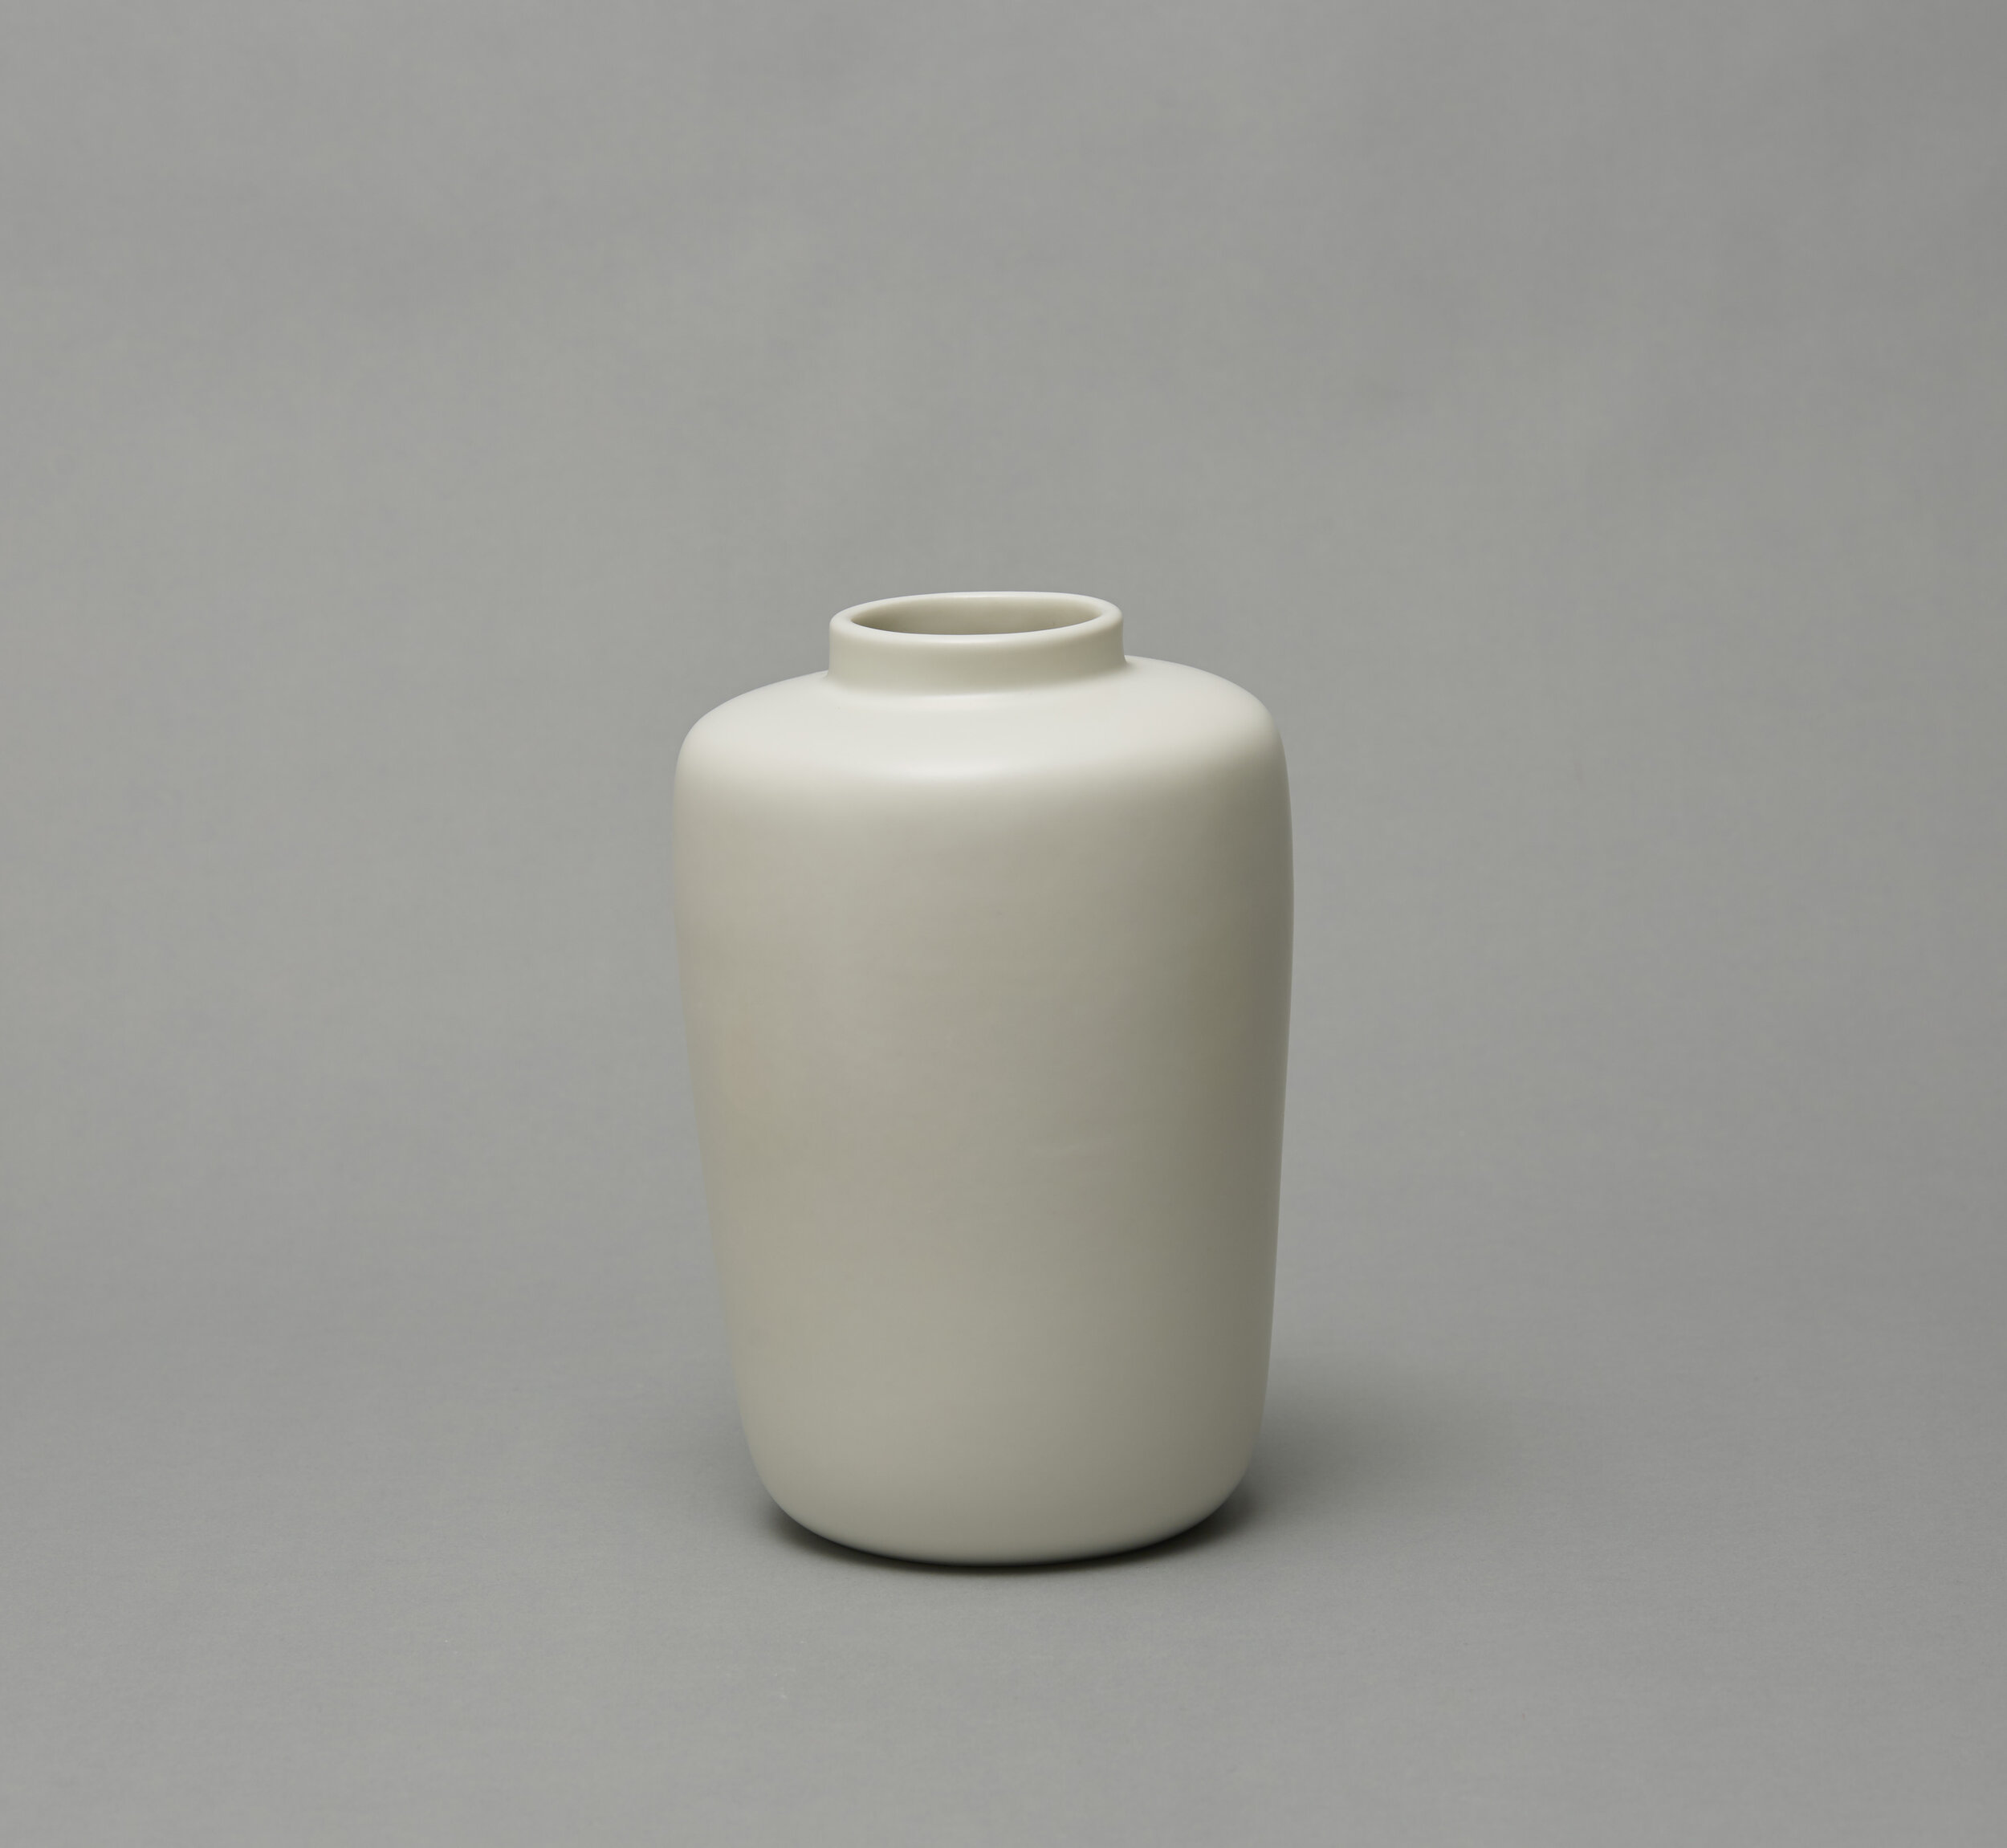 Pearl Symmetrical Vase 2020